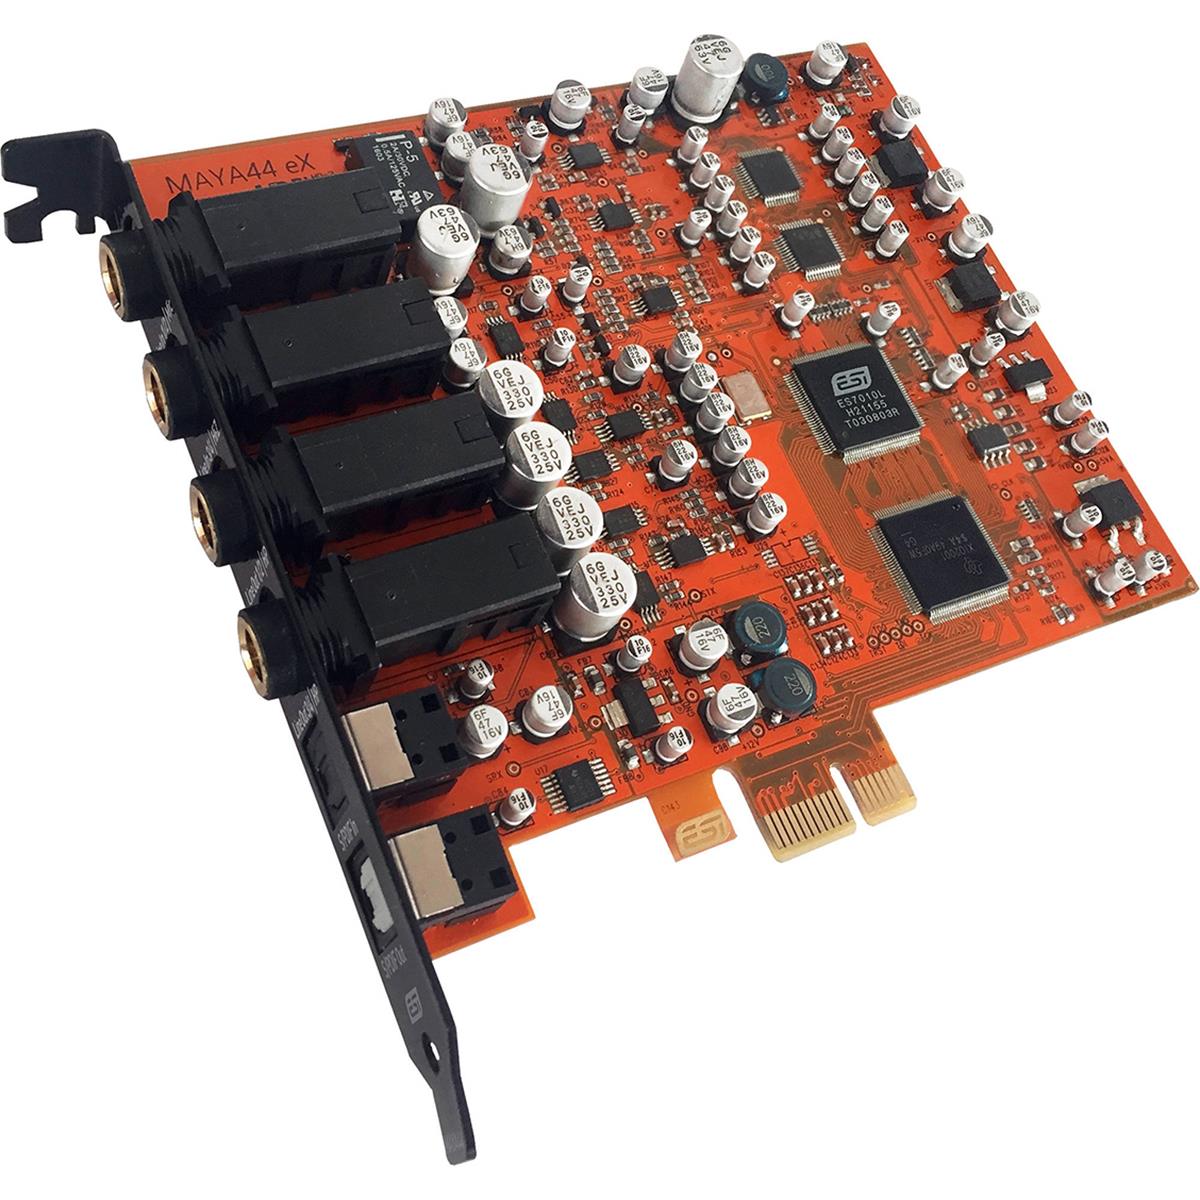 Image of ESI MAYA44 eX 4x4 PCIe Audio Interface Card